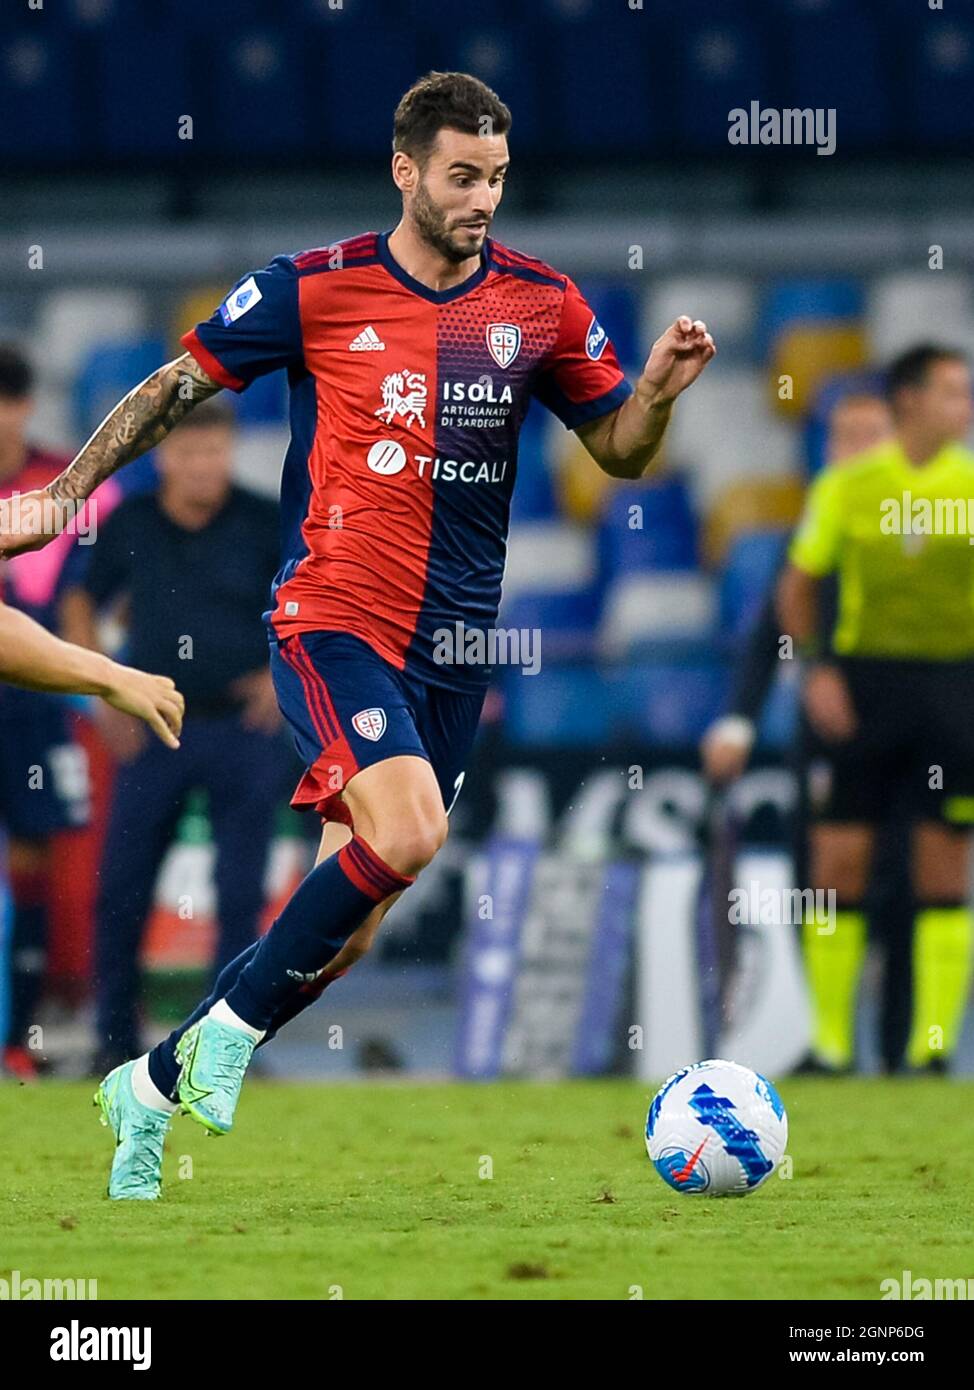 NAPLES, ITALY - SEPTEMBER 26: Gaston Pereiro of Cagliari Calcio